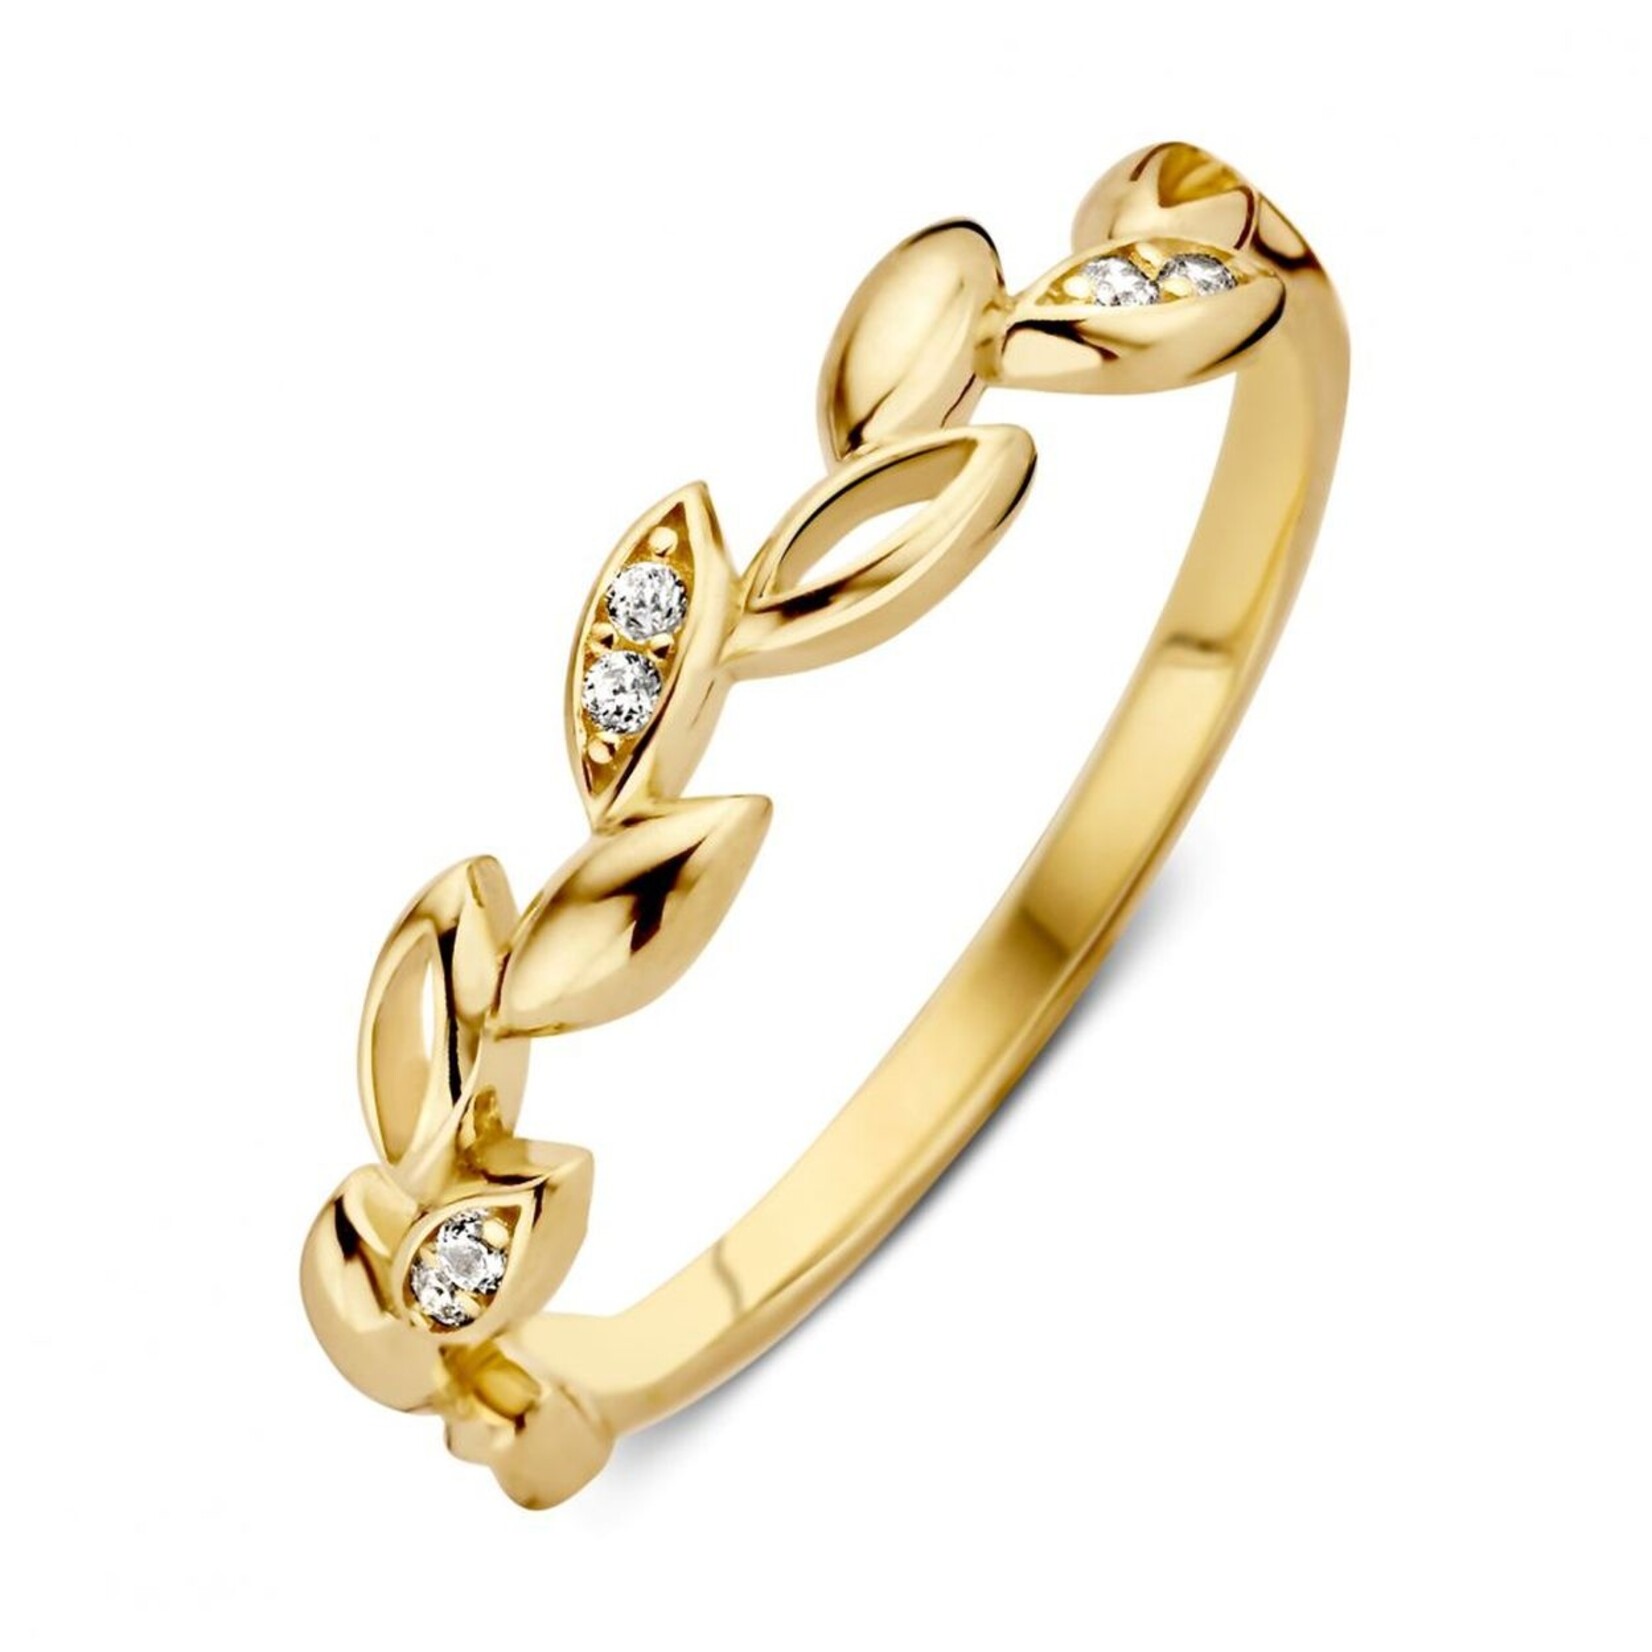 Excellent Jewelry Excellent Jewelry geelgouden ring rm126722 maat 17,75 (56)